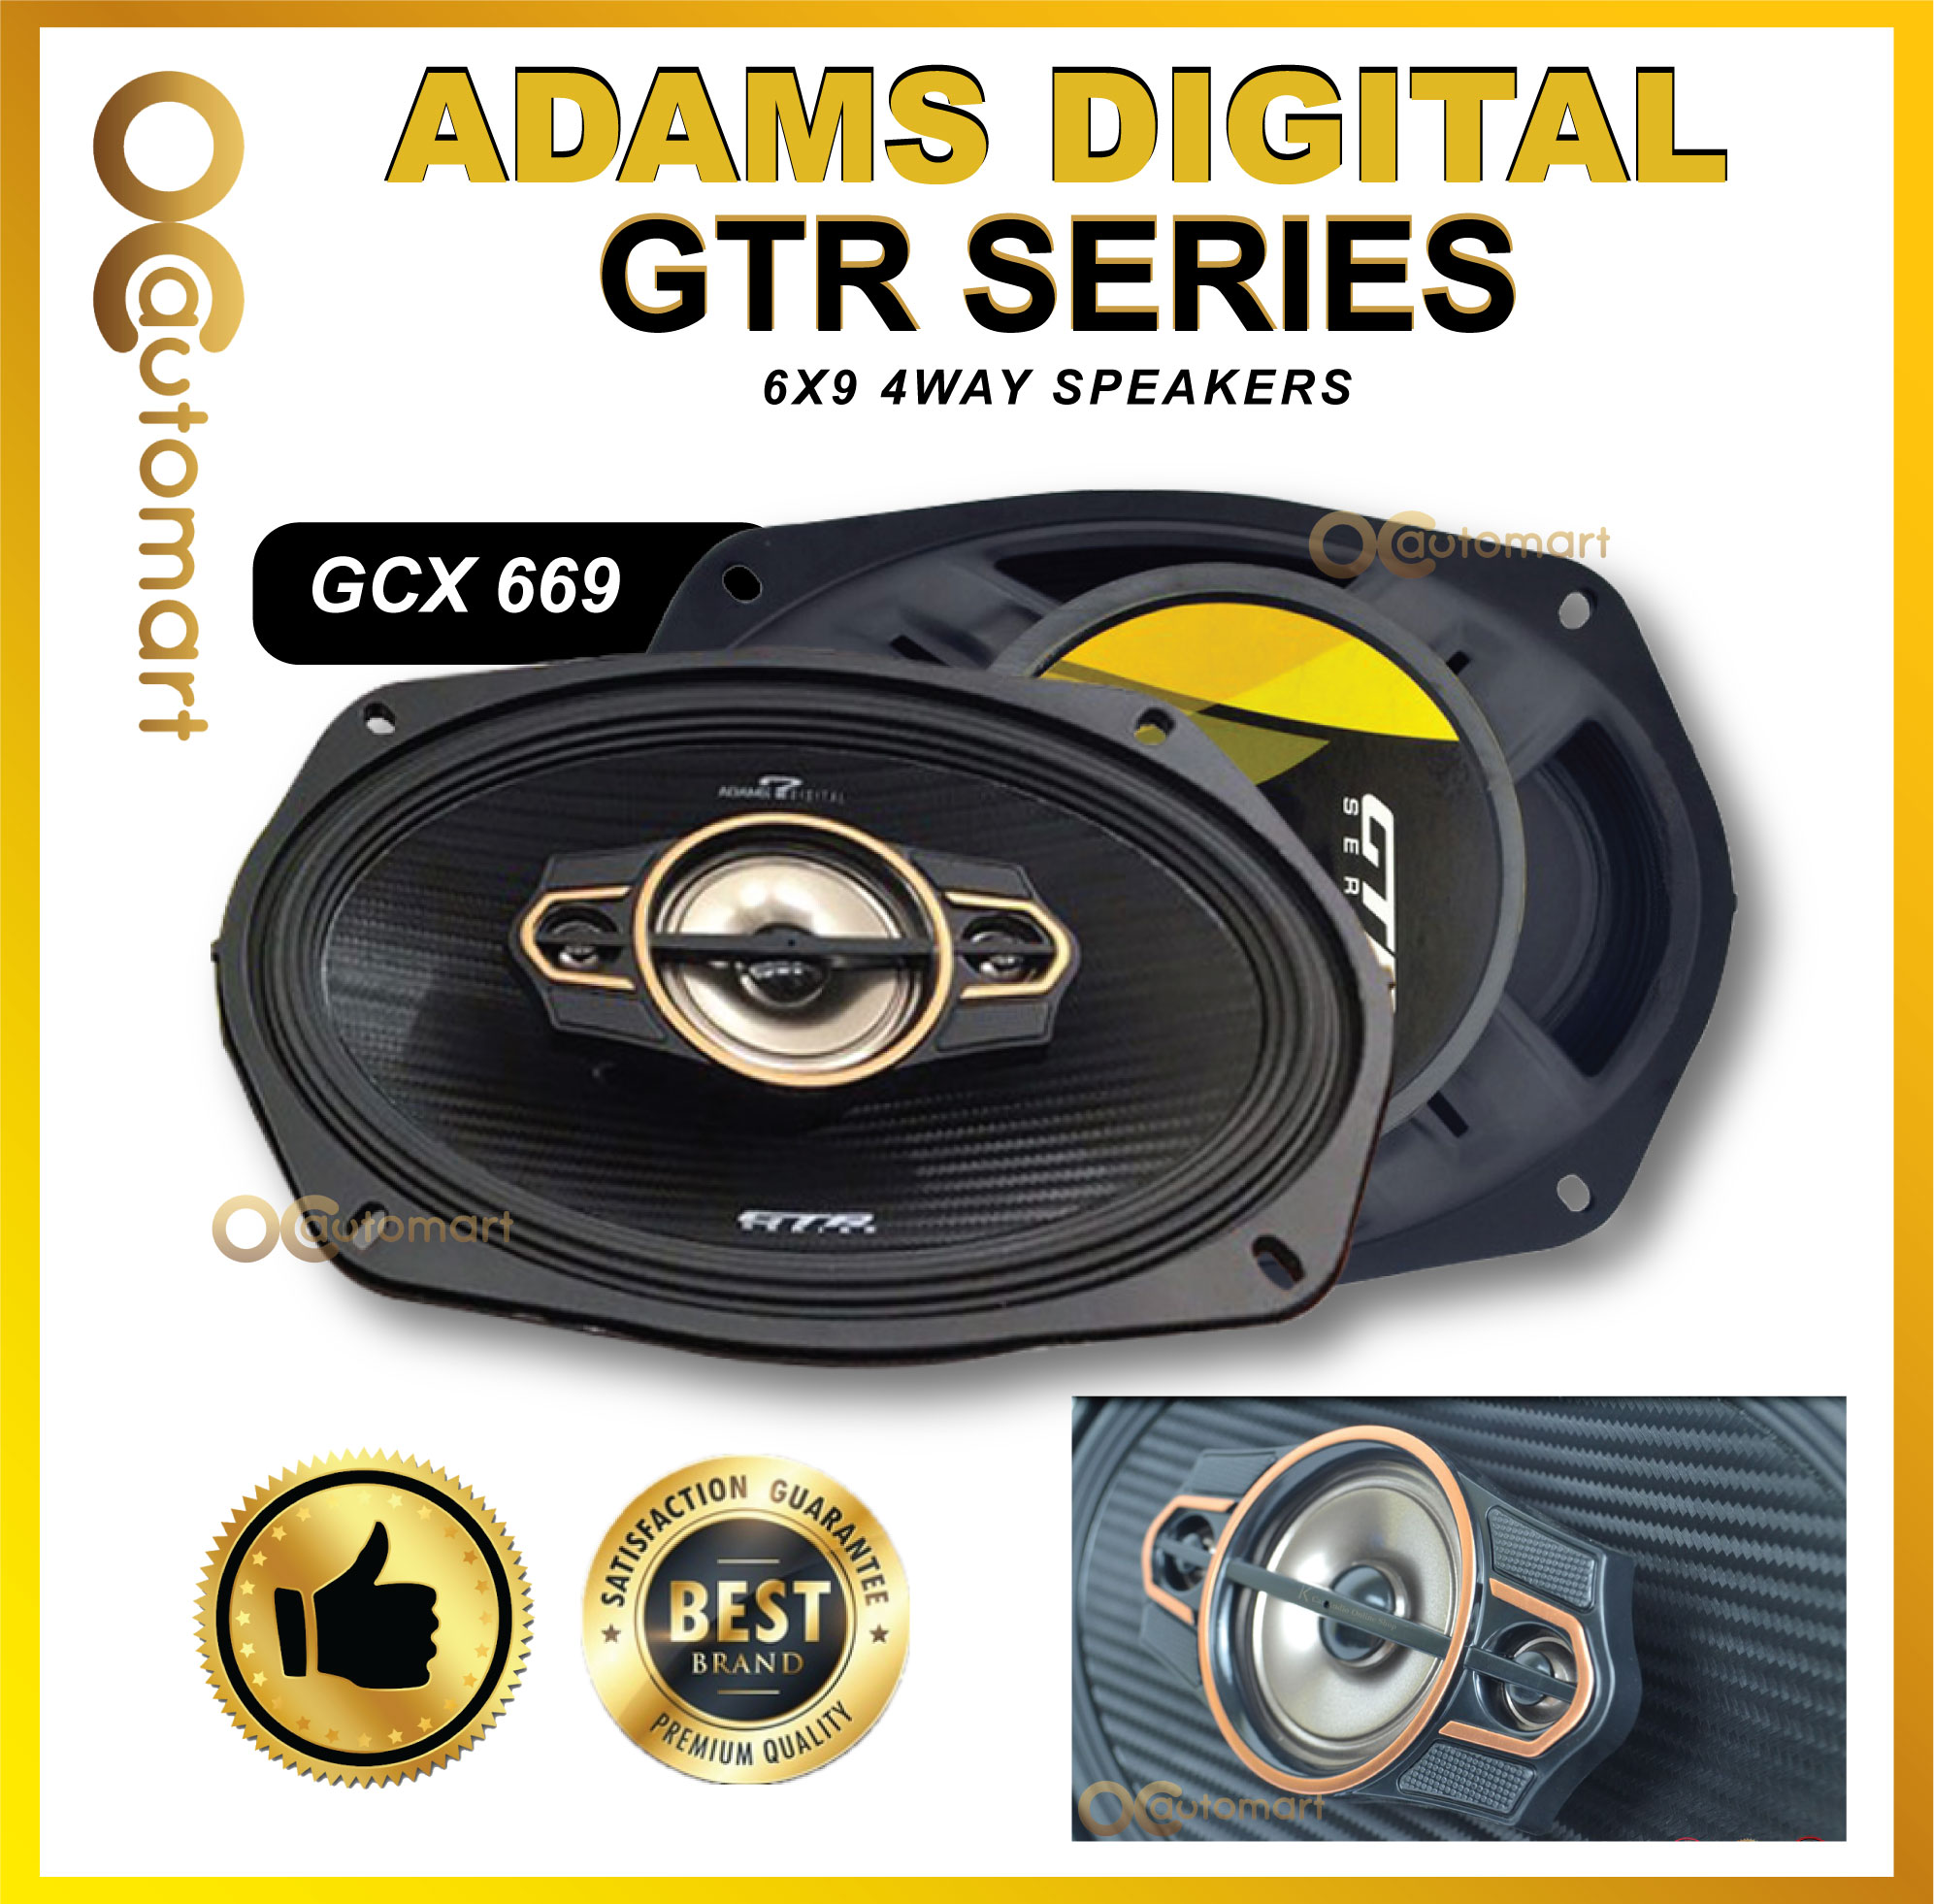 ADAMS DIGITAL GTR SERIES GCX 669 6X9 4 WAY CAR SPEAKER